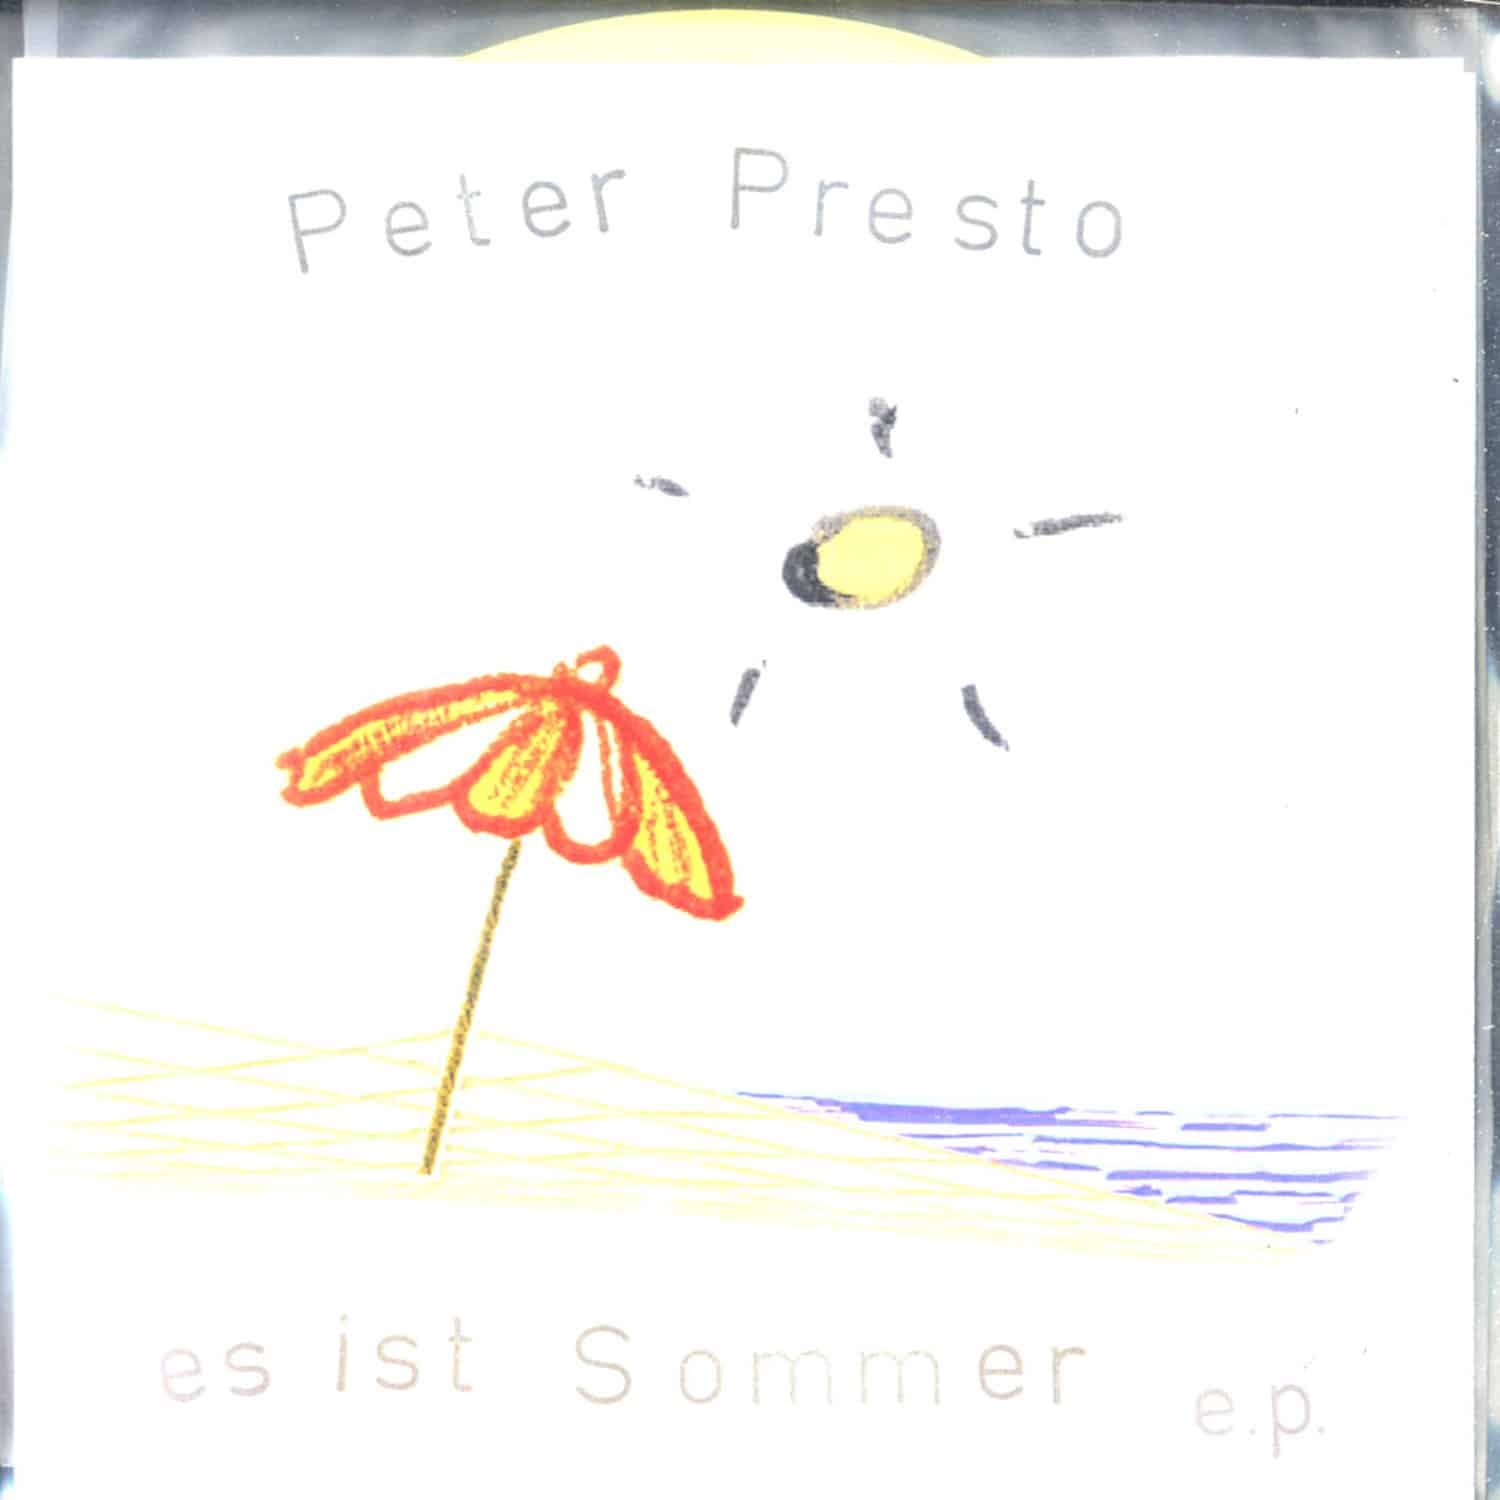 Peter Presto - ES IST SOMMER EP 